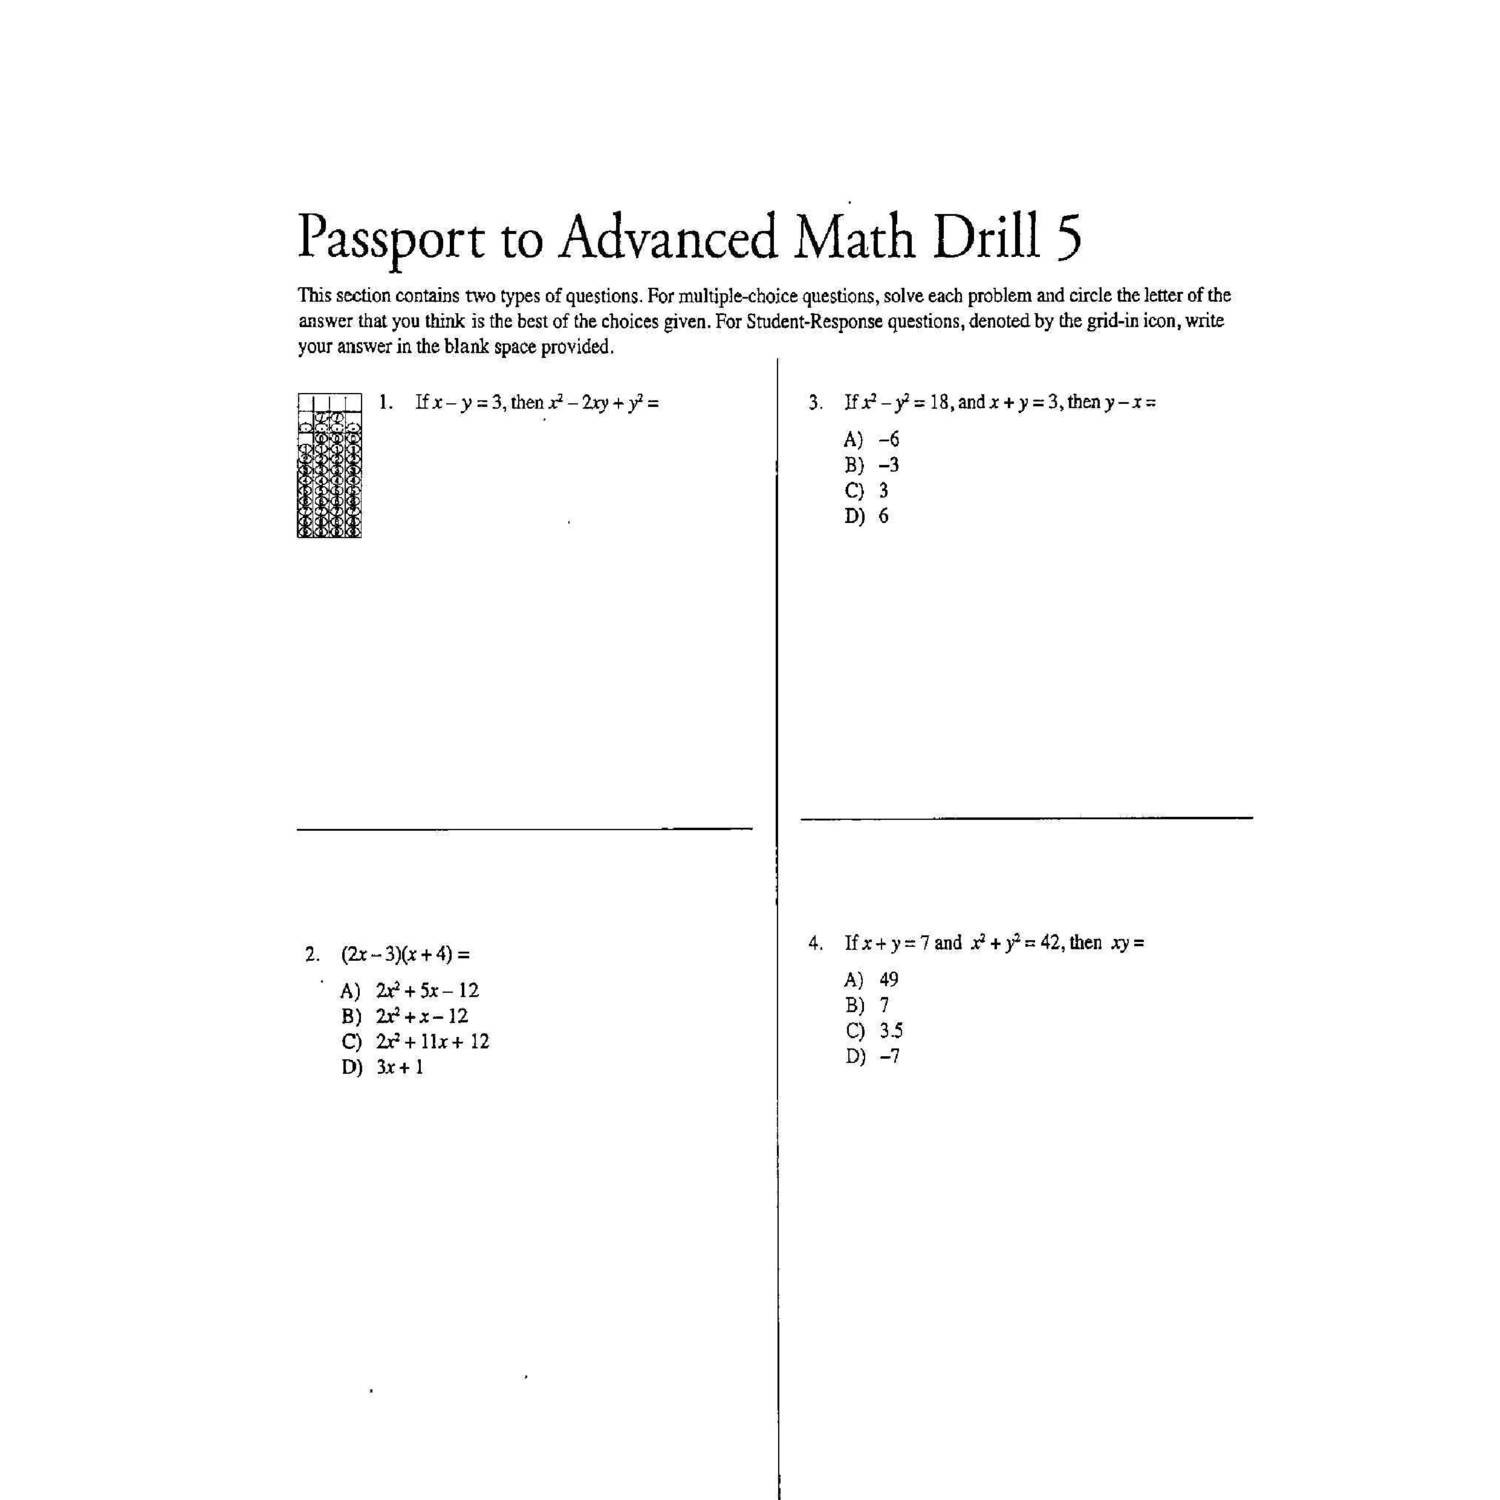 SAT Passport to Advanced Math Practice Test 5.pdf DocDroid